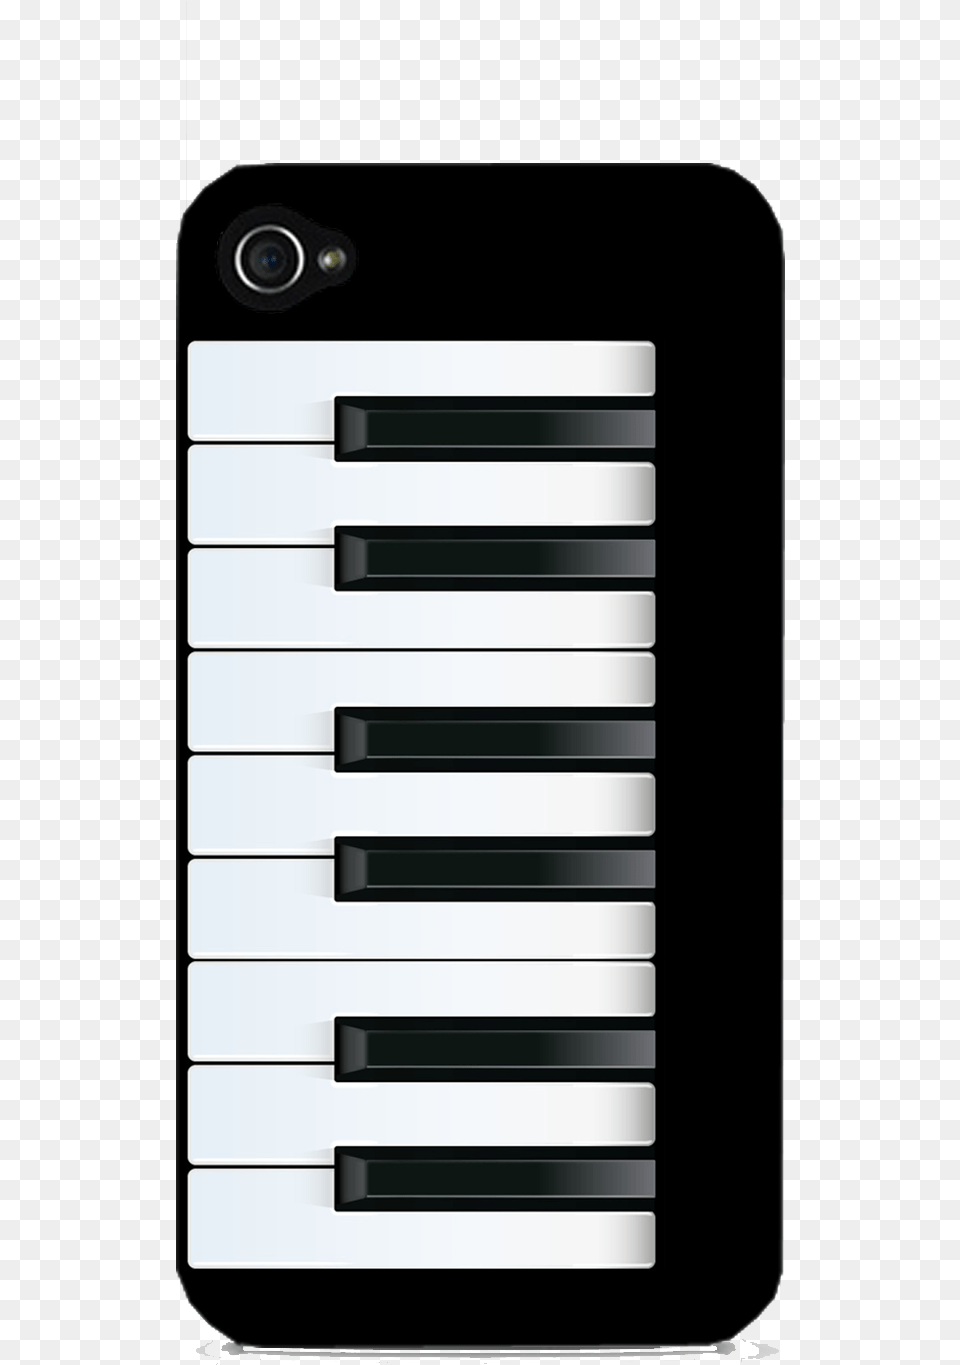 Iphone S Plus Mini Piano, Electronics, Mobile Phone, Phone, Keyboard Png Image